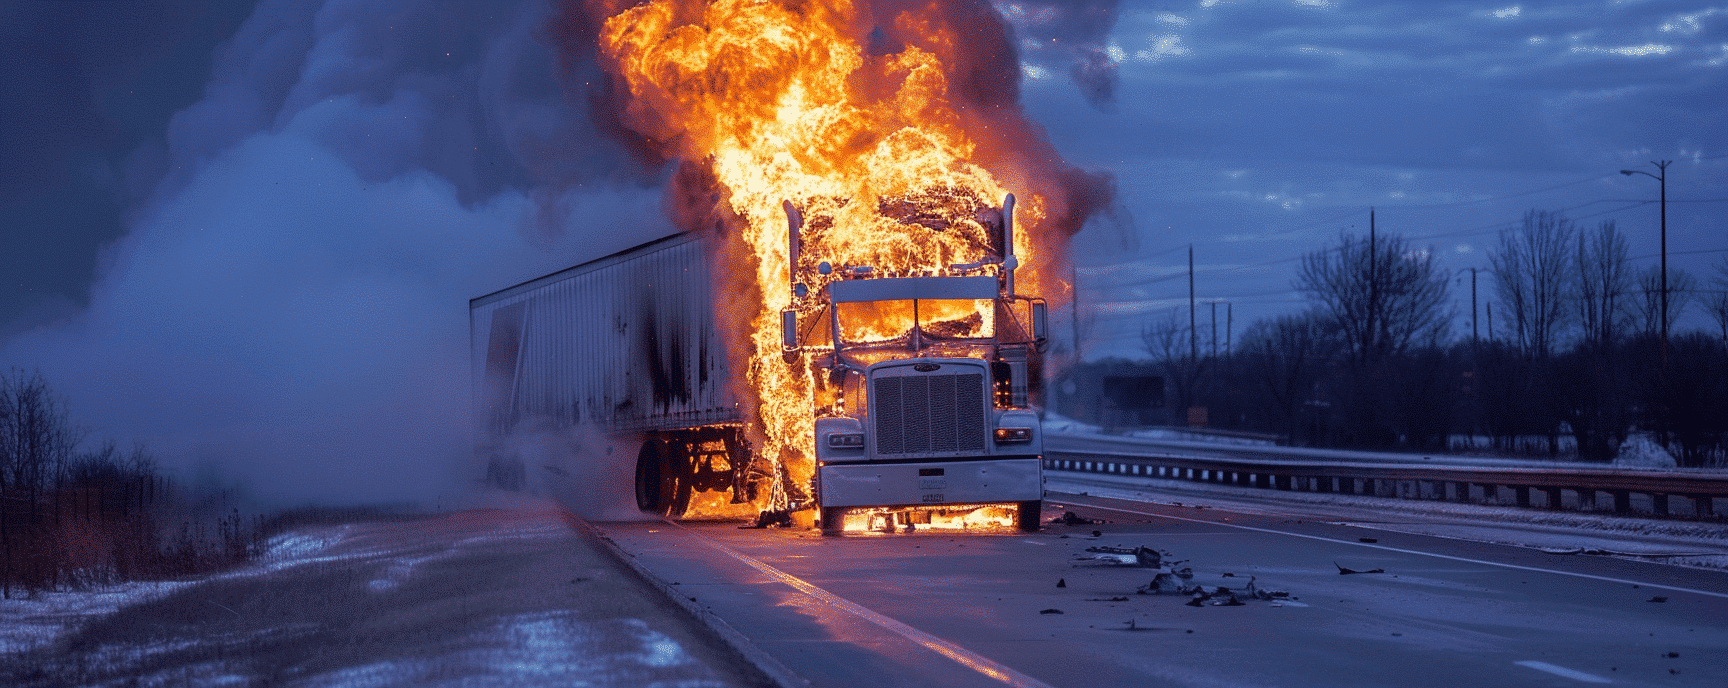 Semi-truck on fire